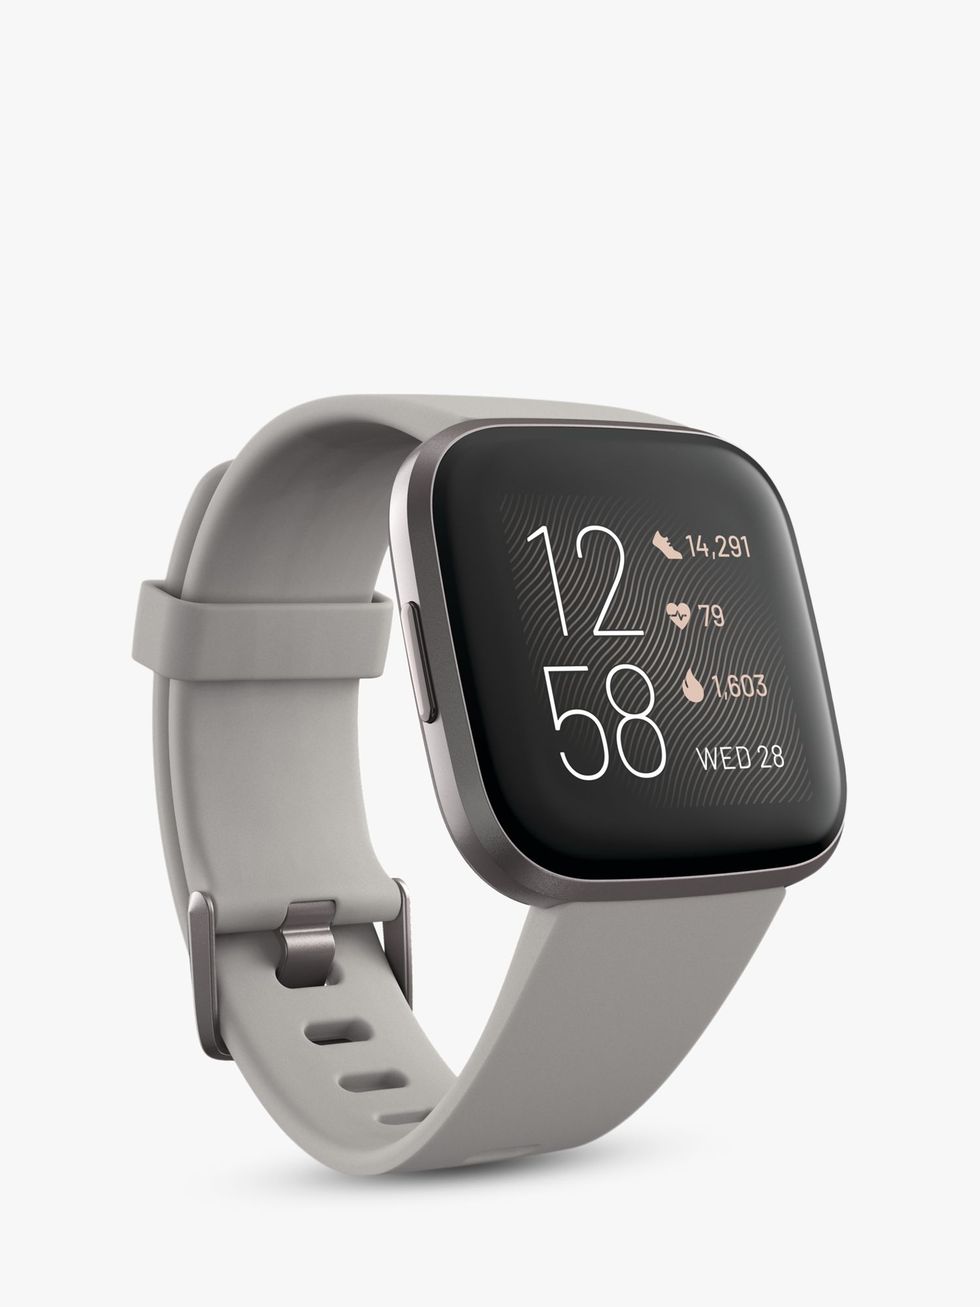 Fitbit Versa 2 Smart Fitness Watch, Black/Carbon